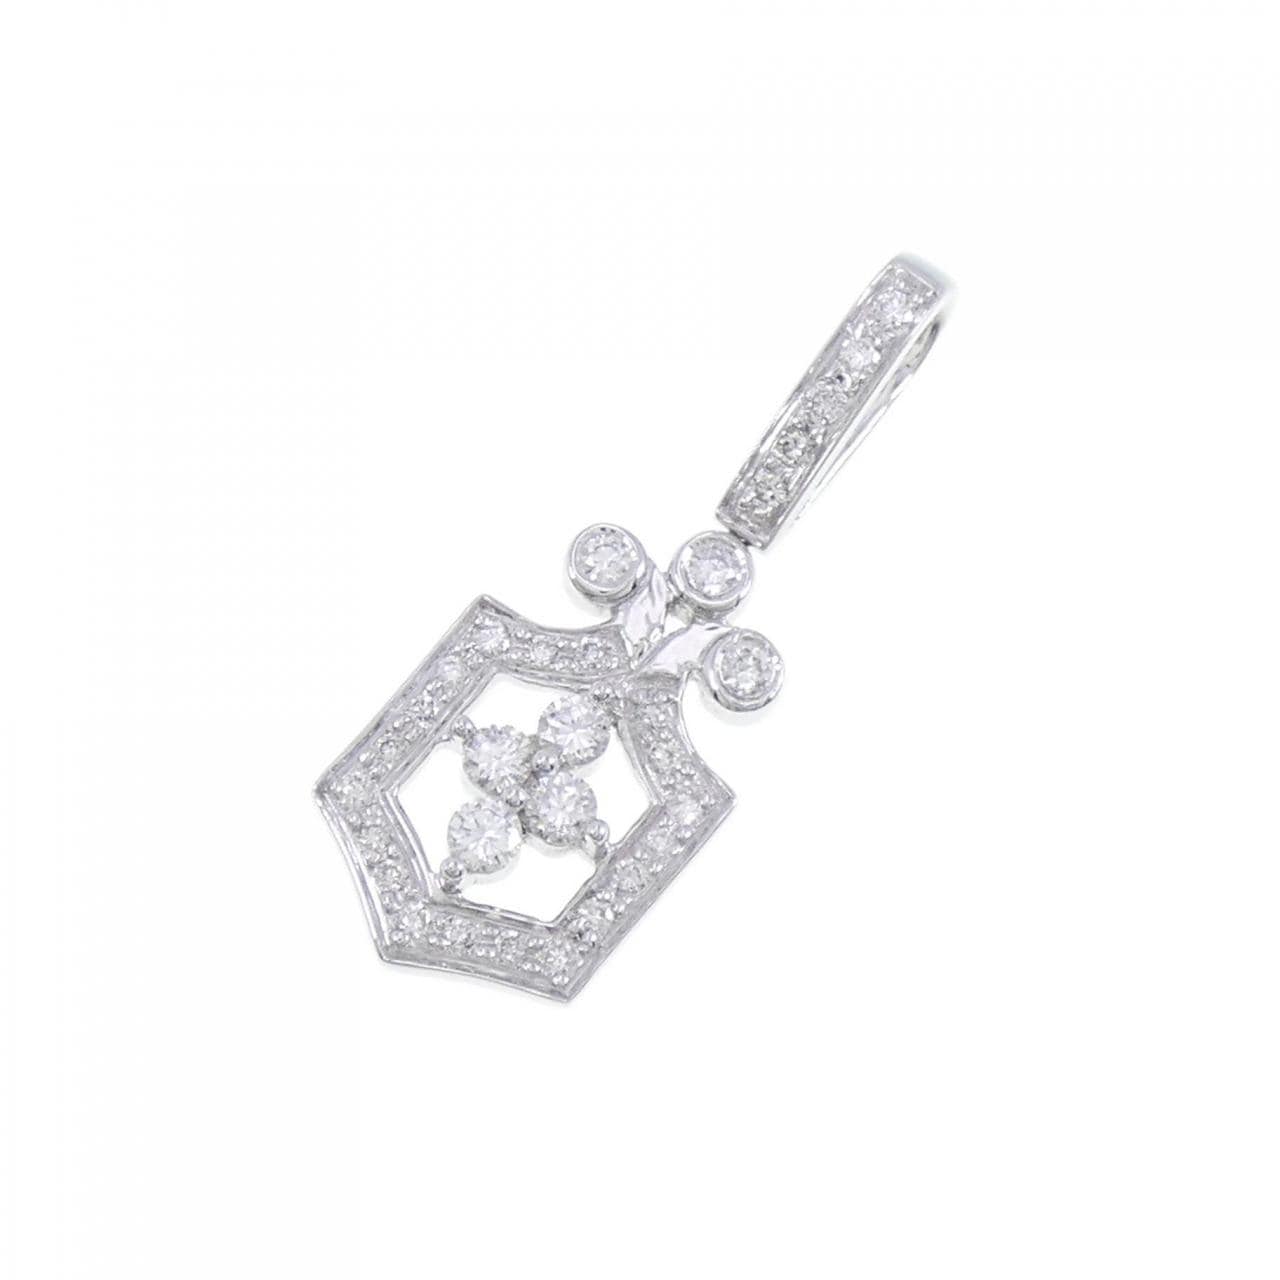 K18WG Diamond pendant